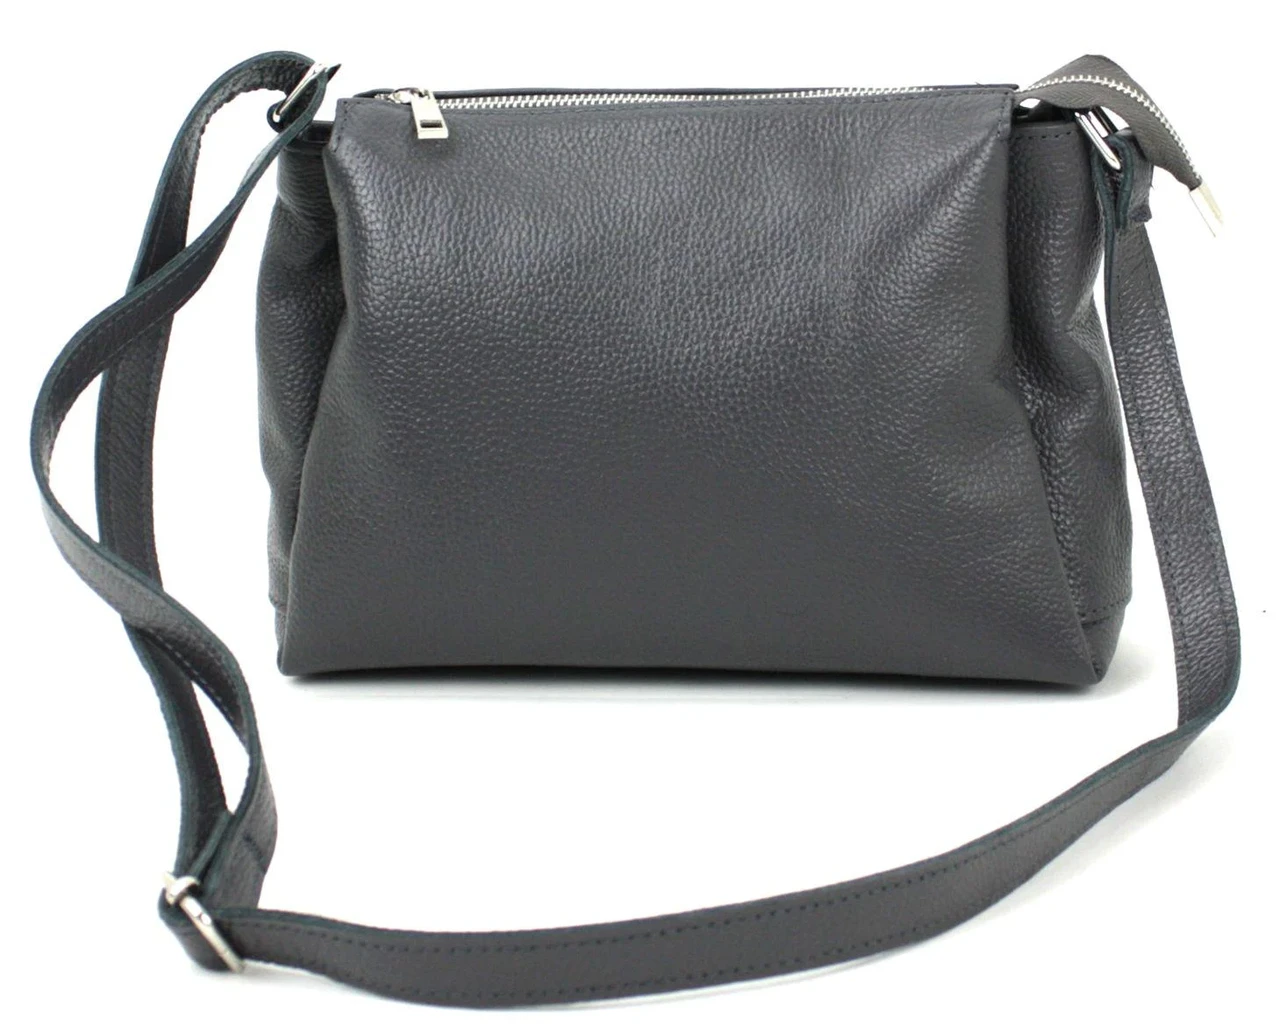 Women's leather bag Borsacomoda dark gray